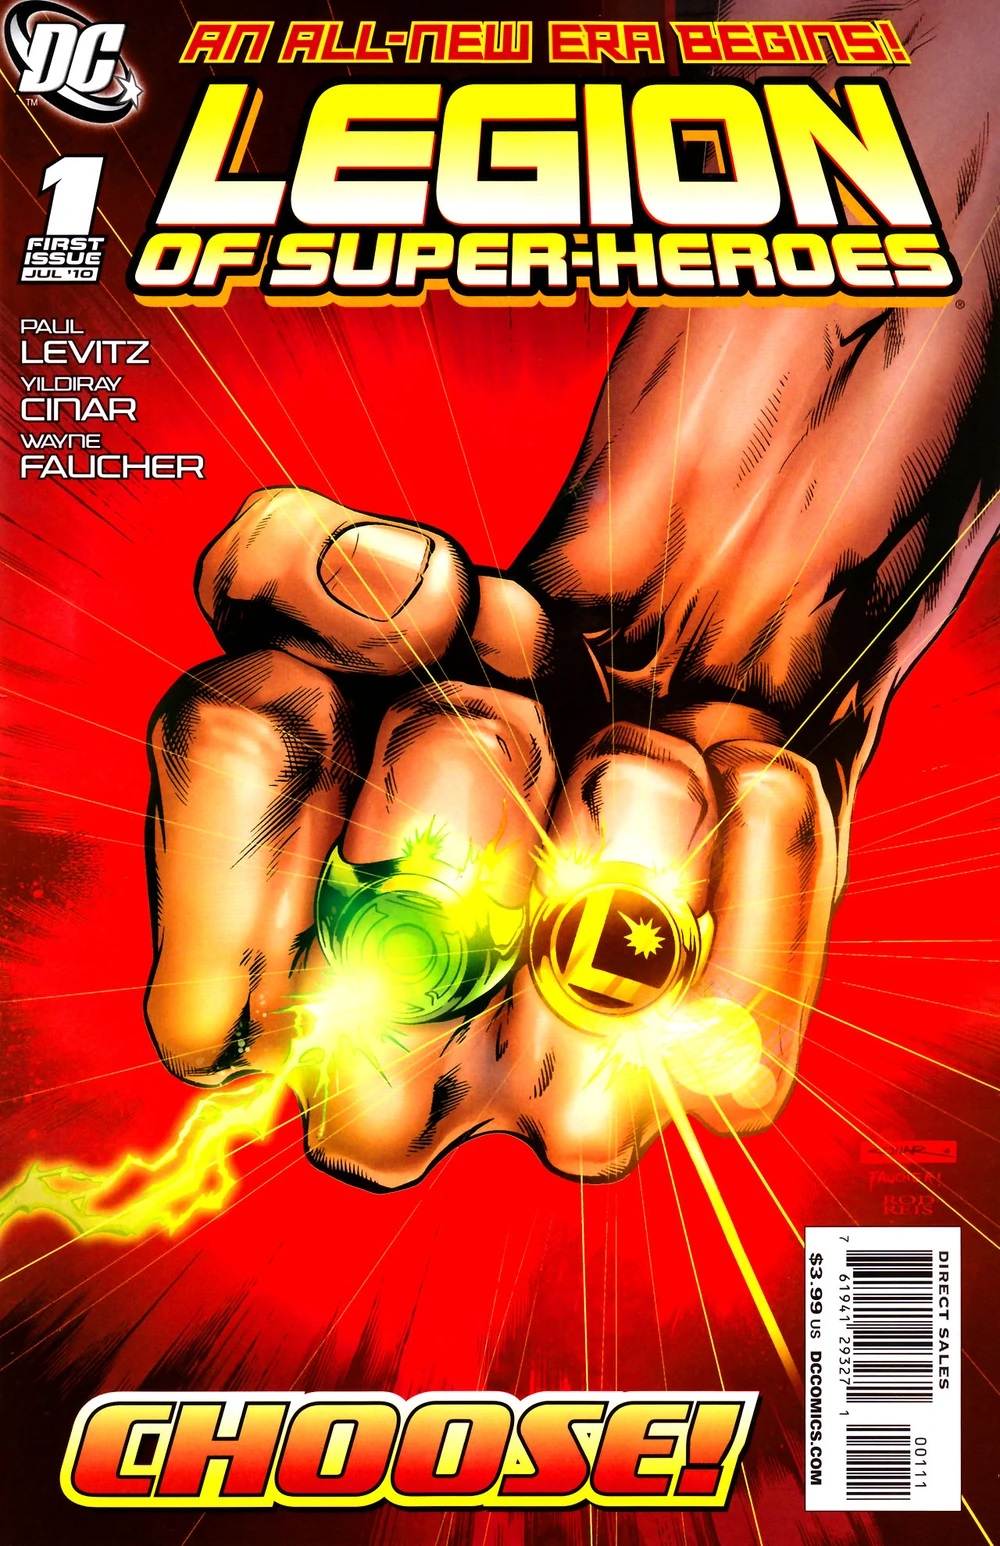 Legion of Super-Heroes Volume 6 Full Series Bundle Issues 1-16 + Annual